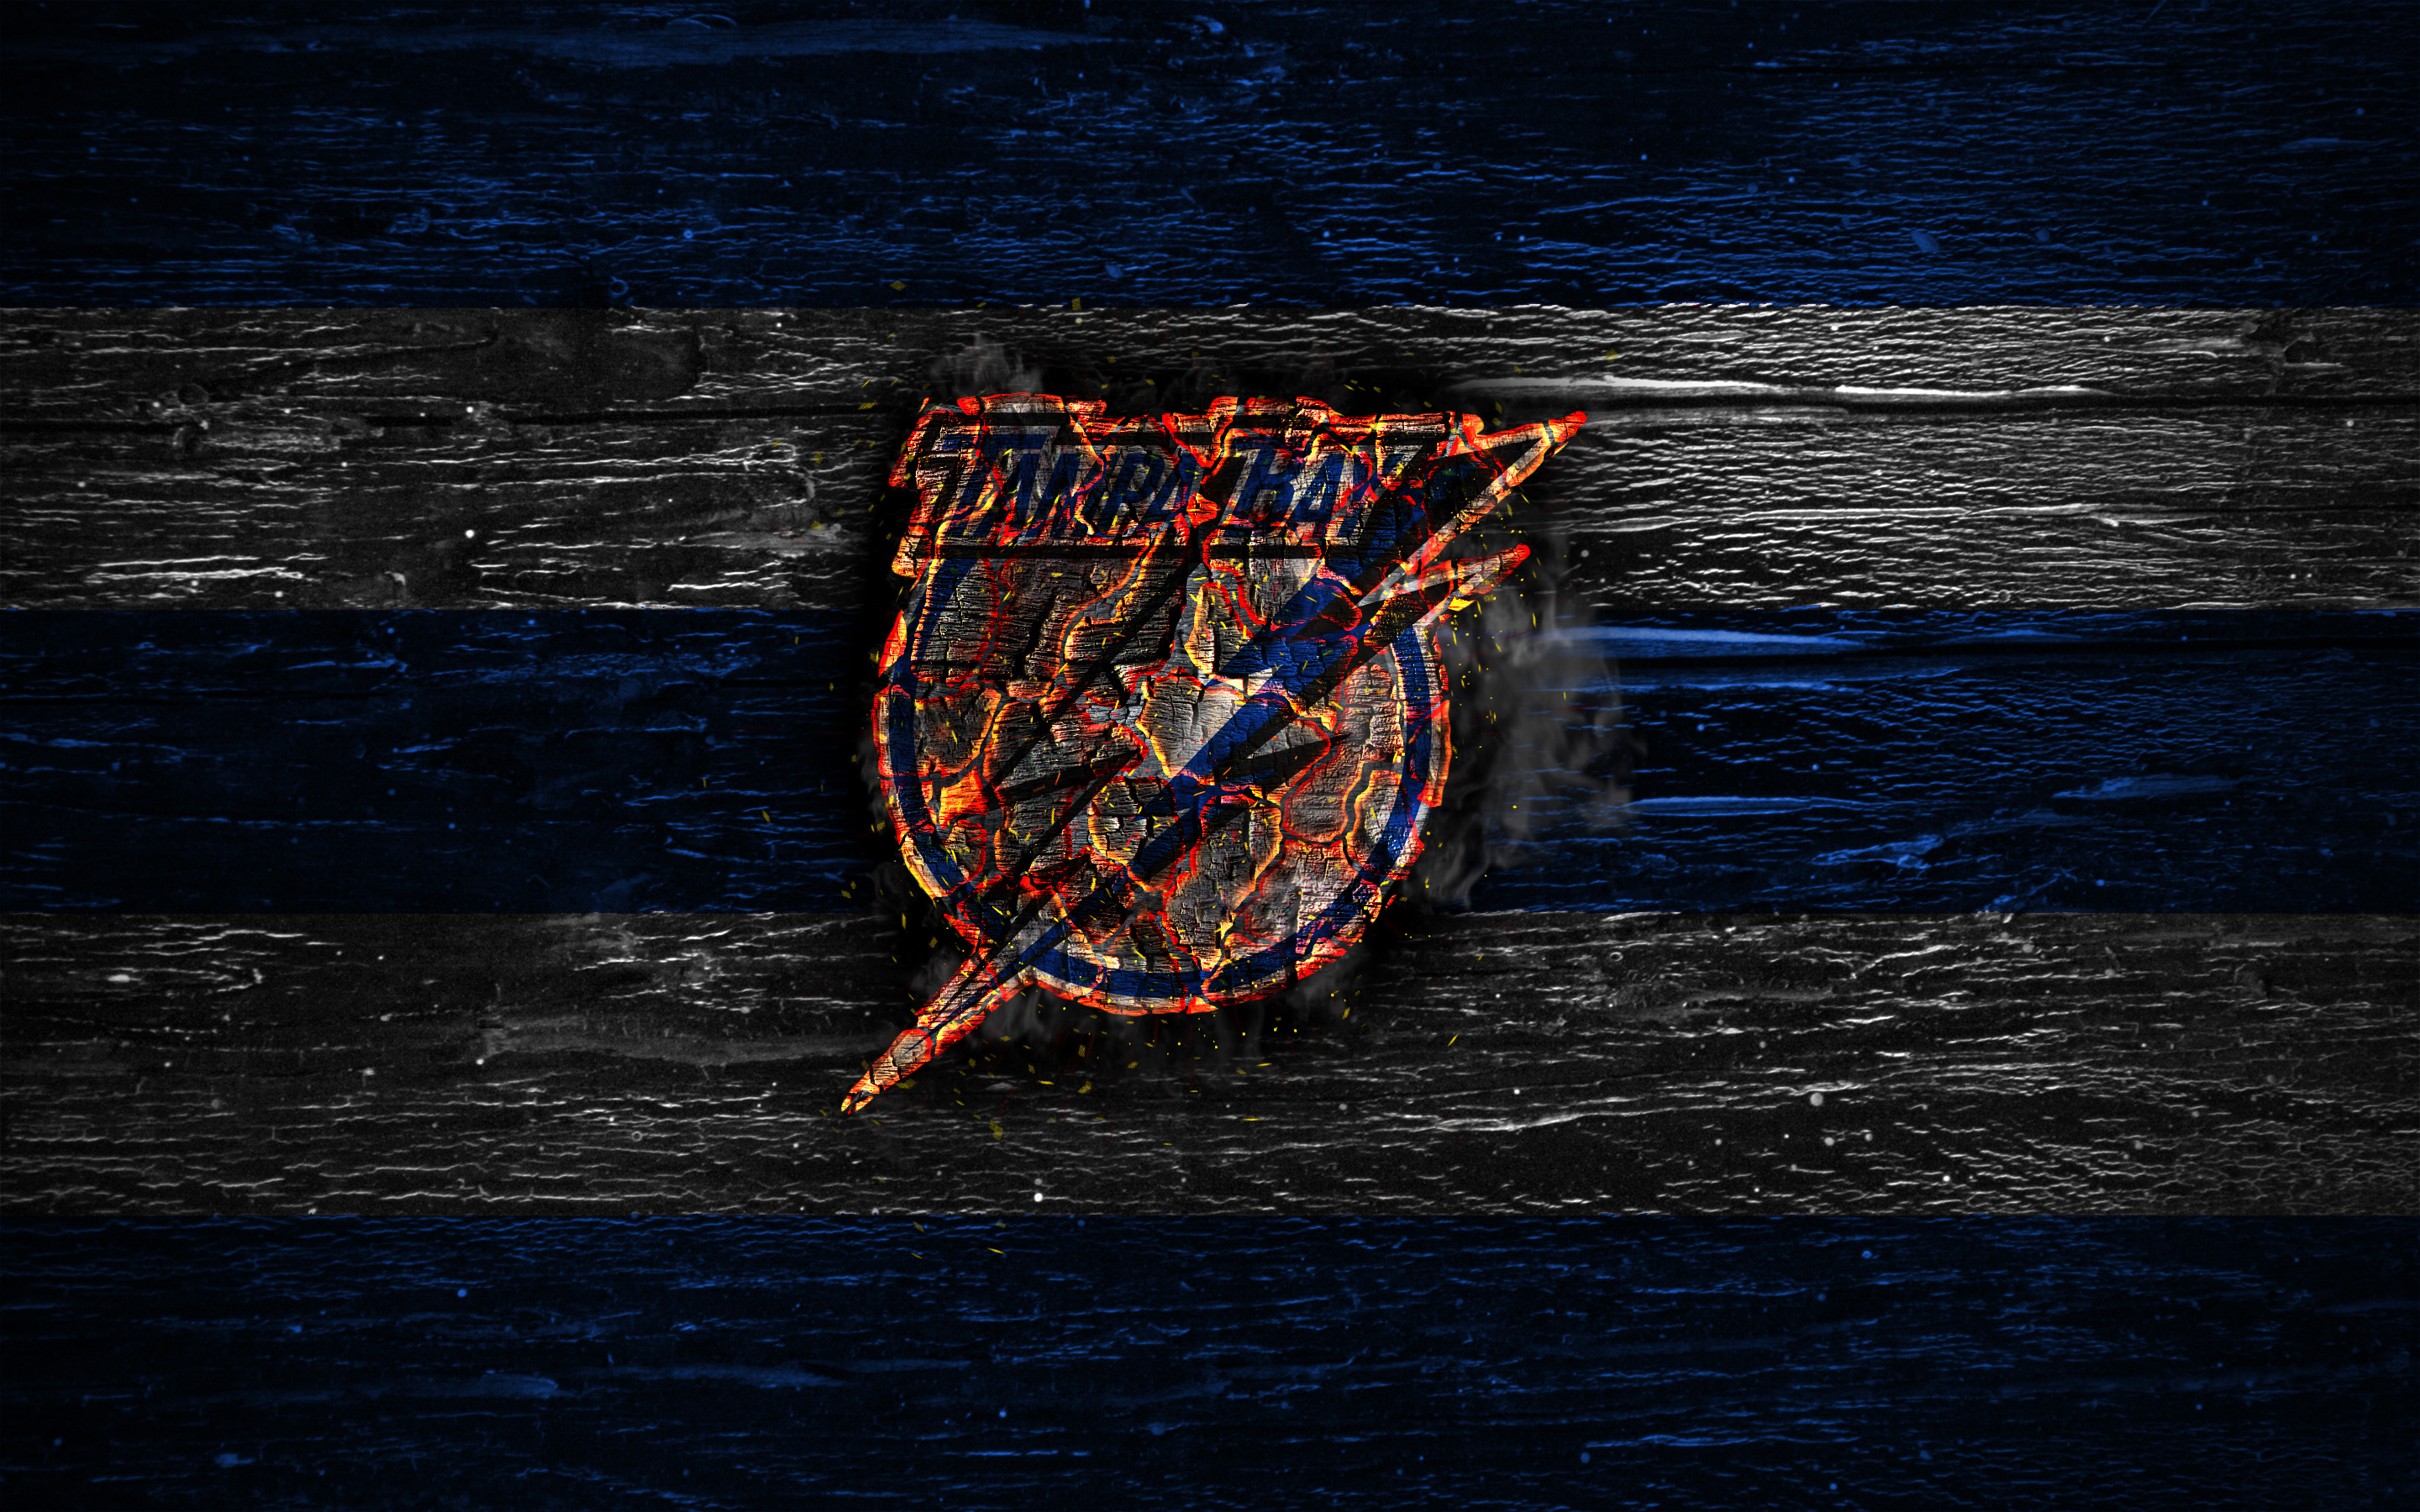 Tampa Bay Lightning wallpaper by ElnazTajaddod - Download on ZEDGE™